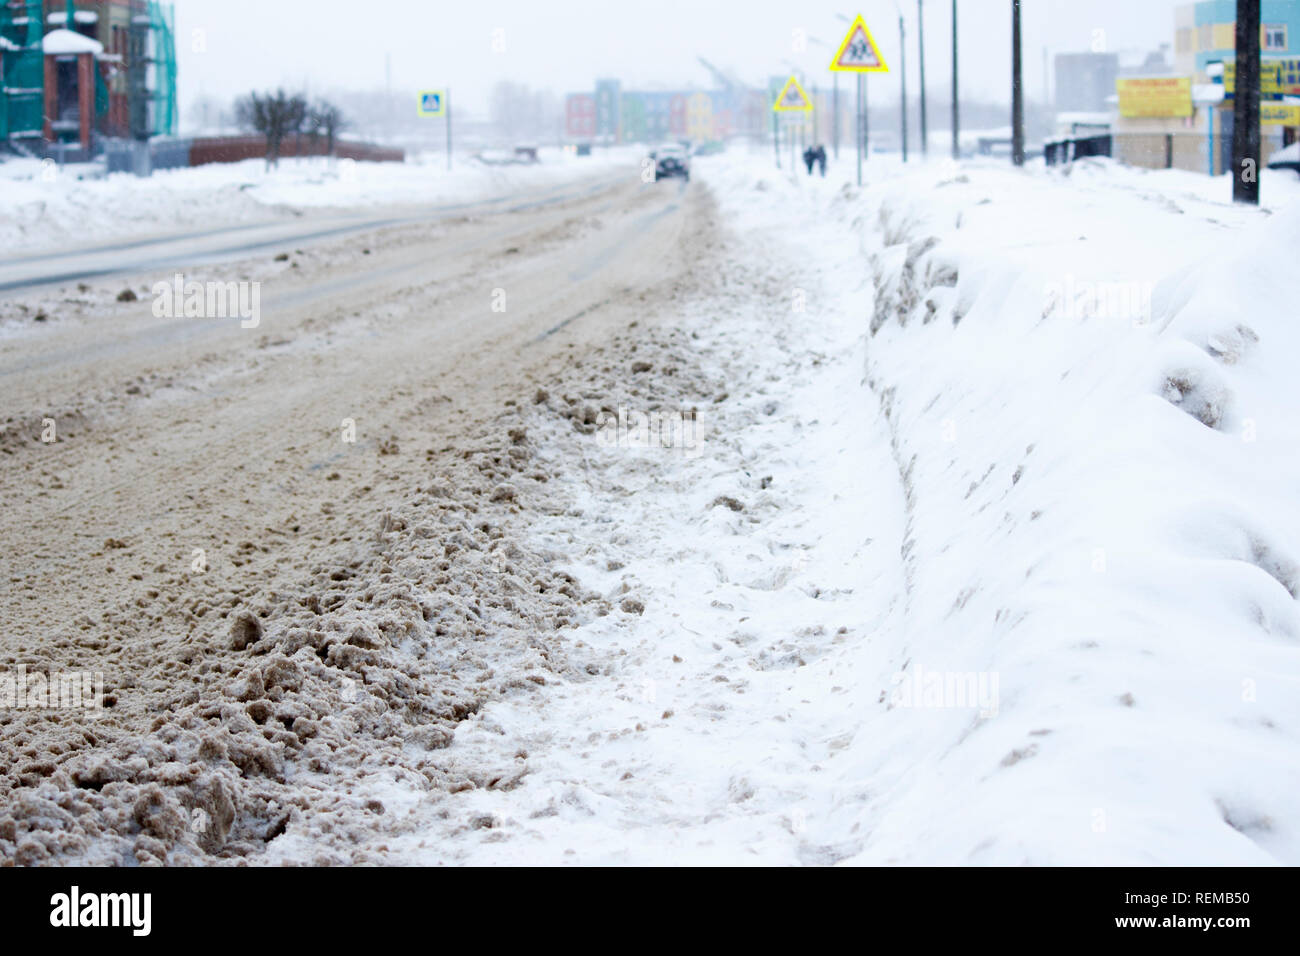 problem after snowfall - snow on the city road, snow porridge Stock Photo